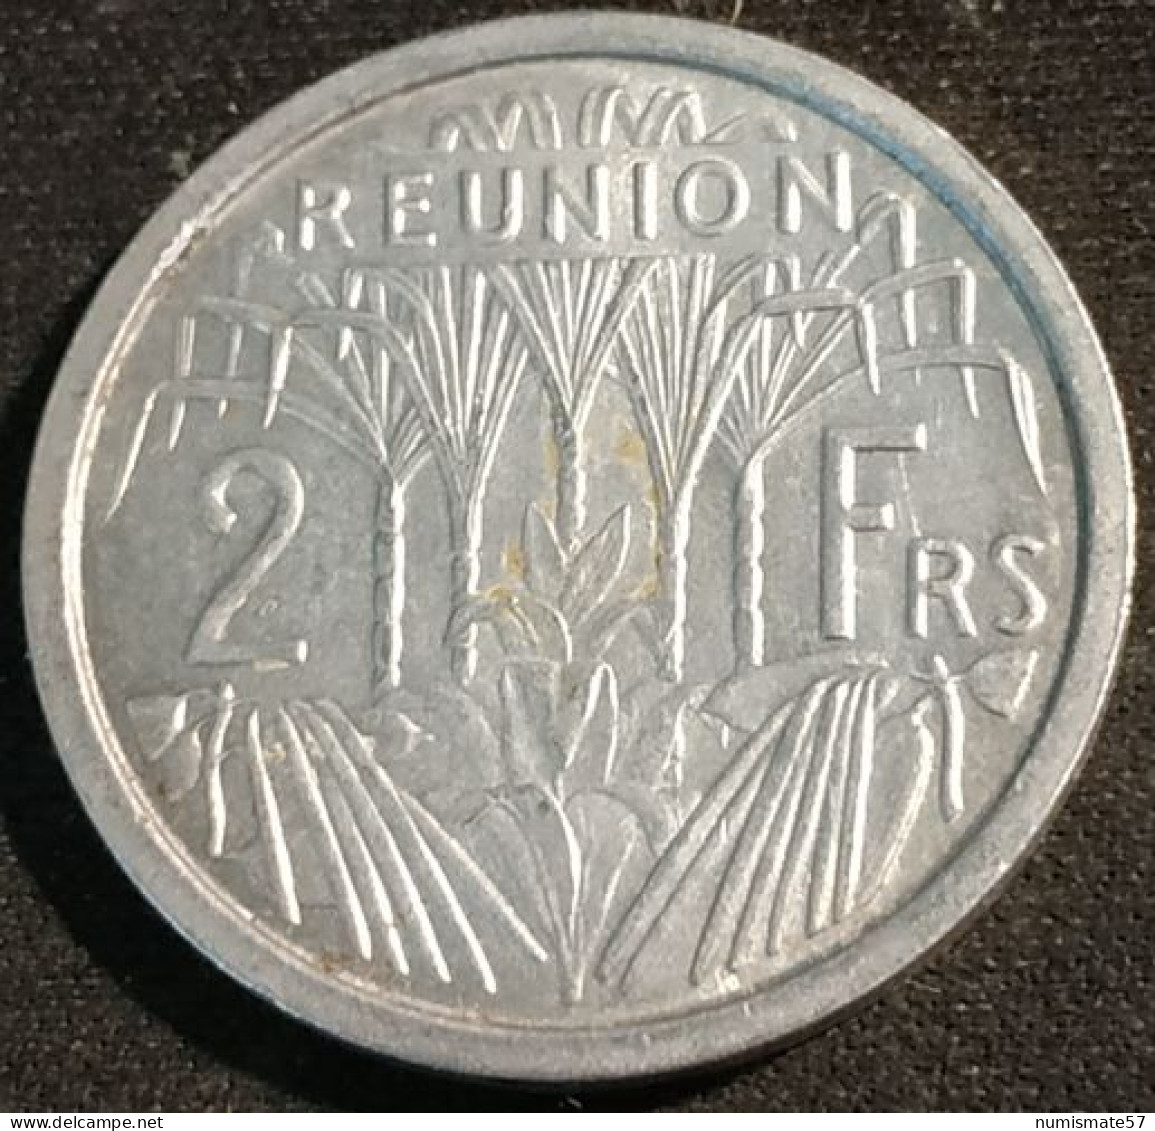 RARE - LA REUNION - 2 FRANCS 1969 - KM 8 - Reunión